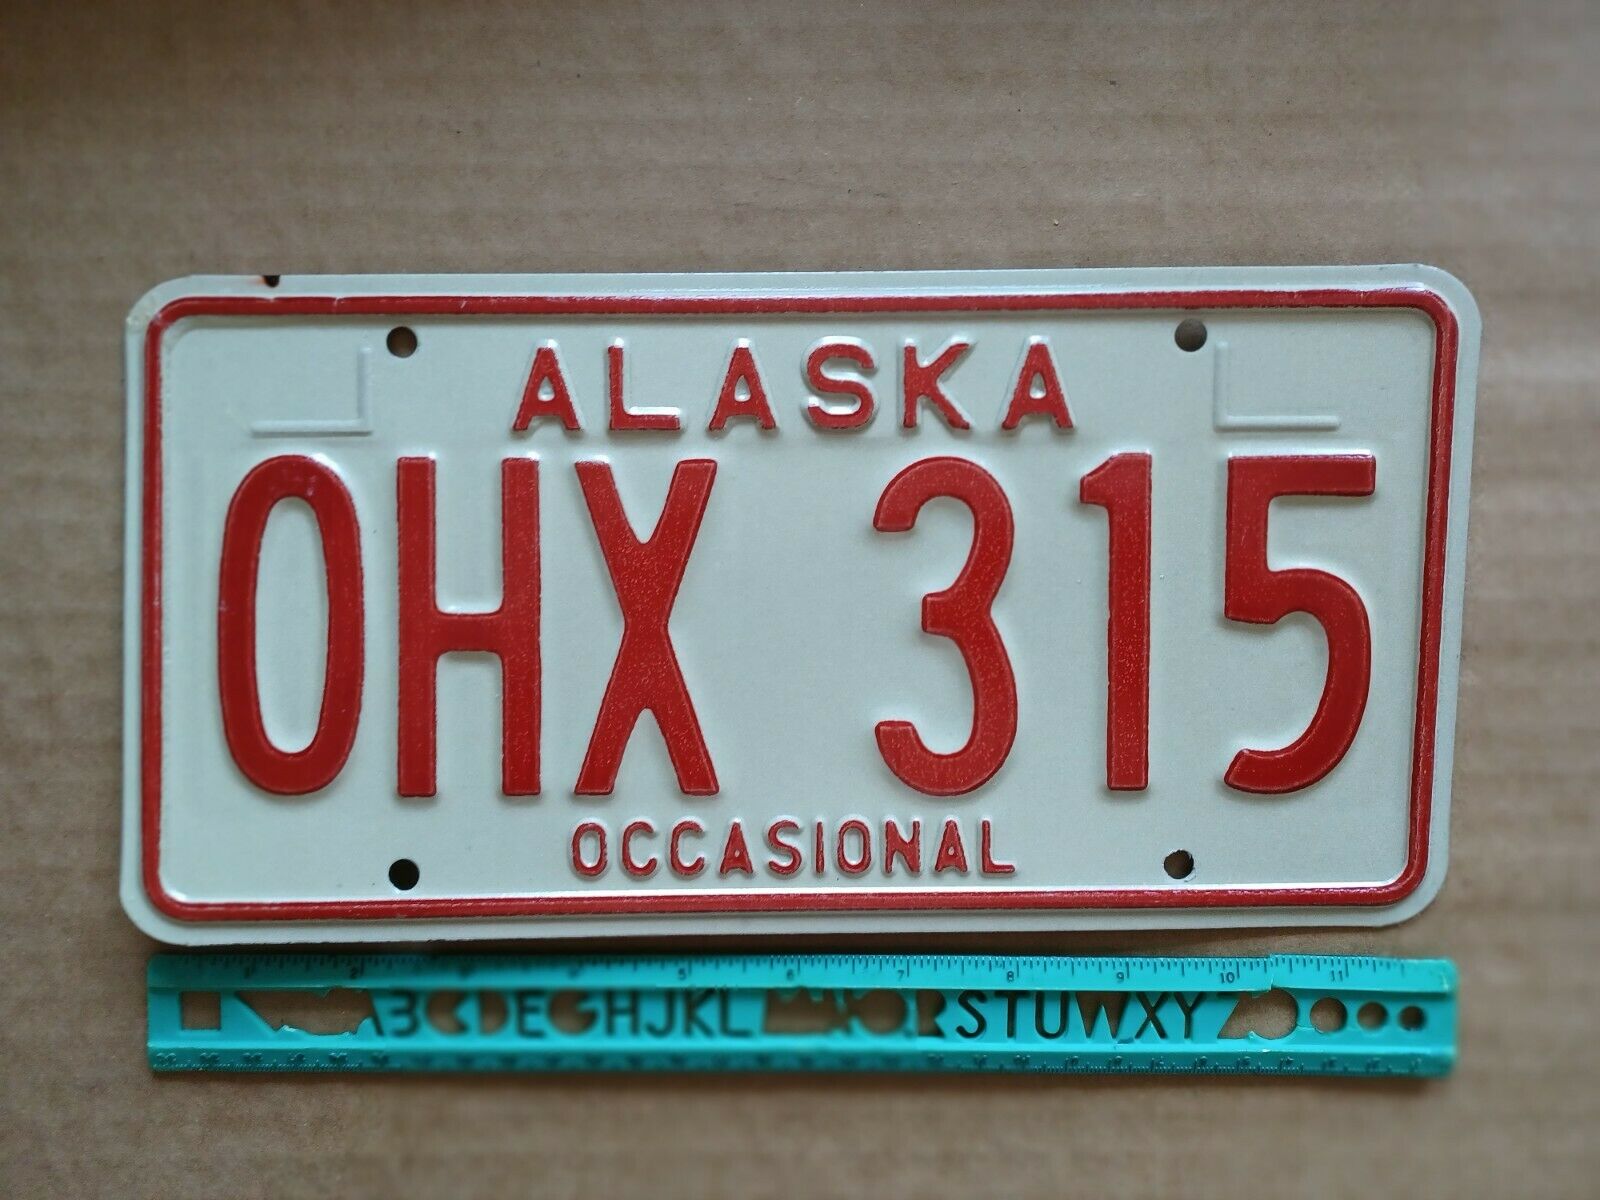 License Plate, Alaska, 1976, Occasional, Ohx 315